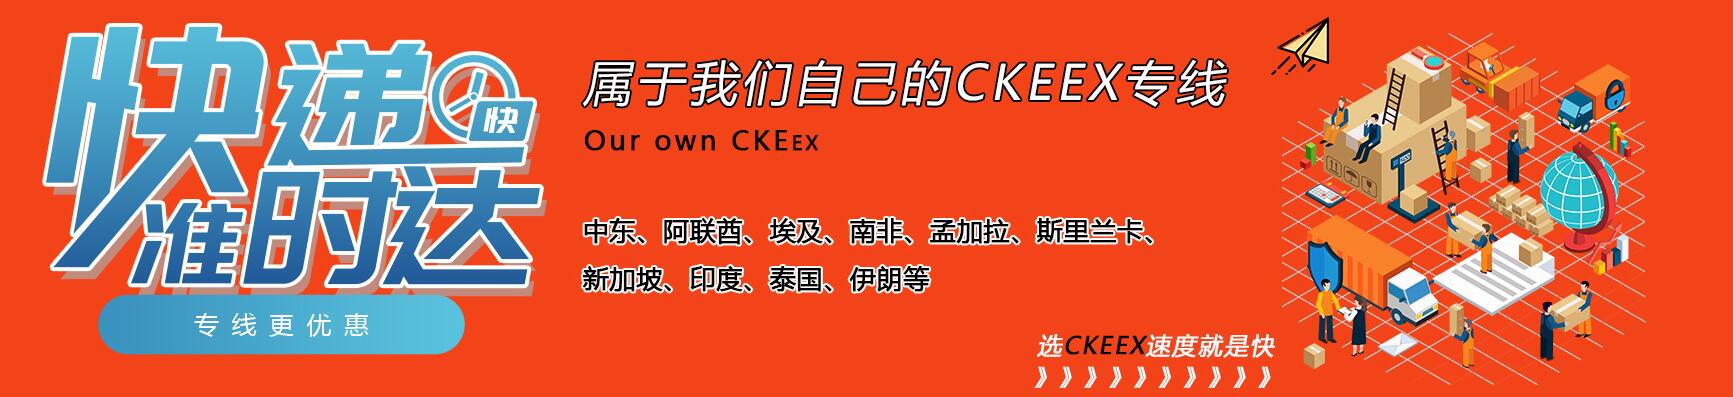 CKEEX2.jpg